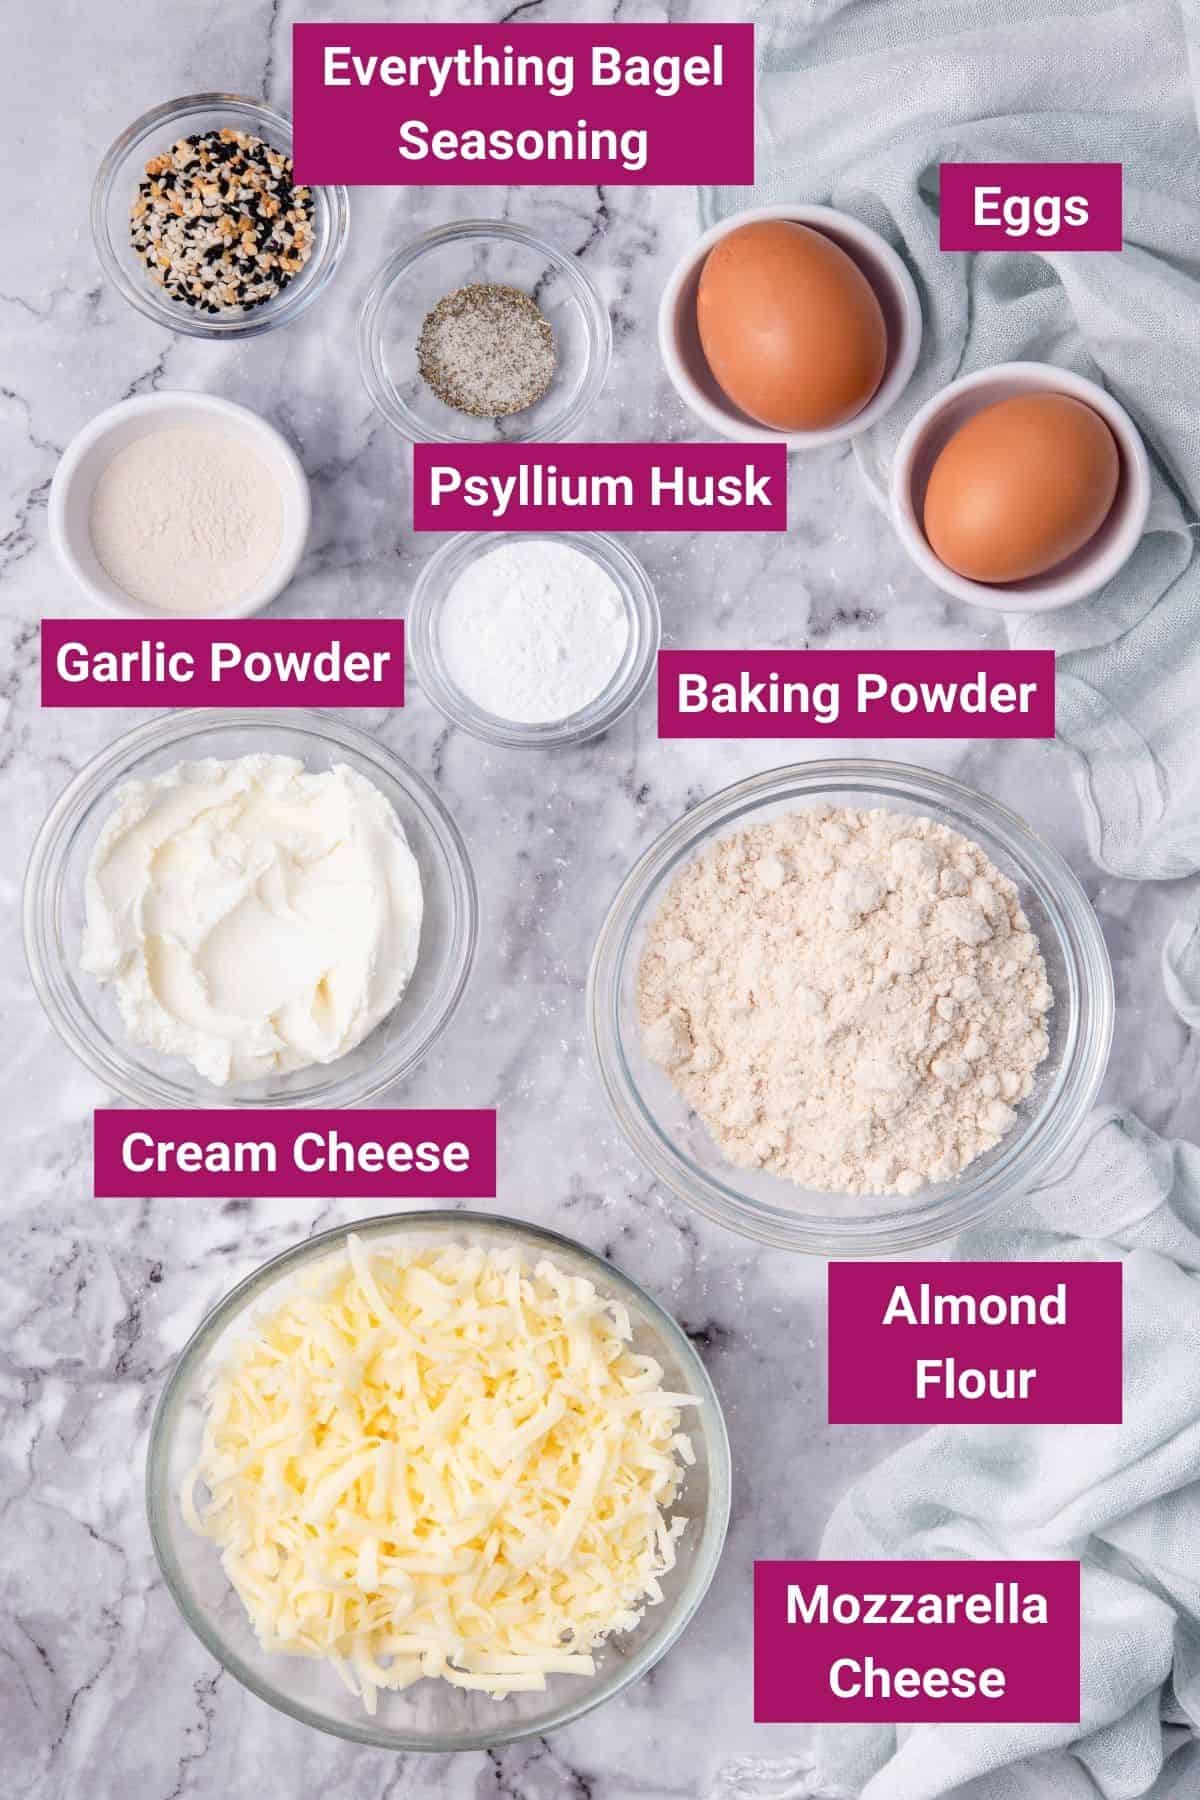 almond flour, baking powder, garlic powder, eggs, cream cheese, mozzarella cheese and psyllium husk on separate bowls